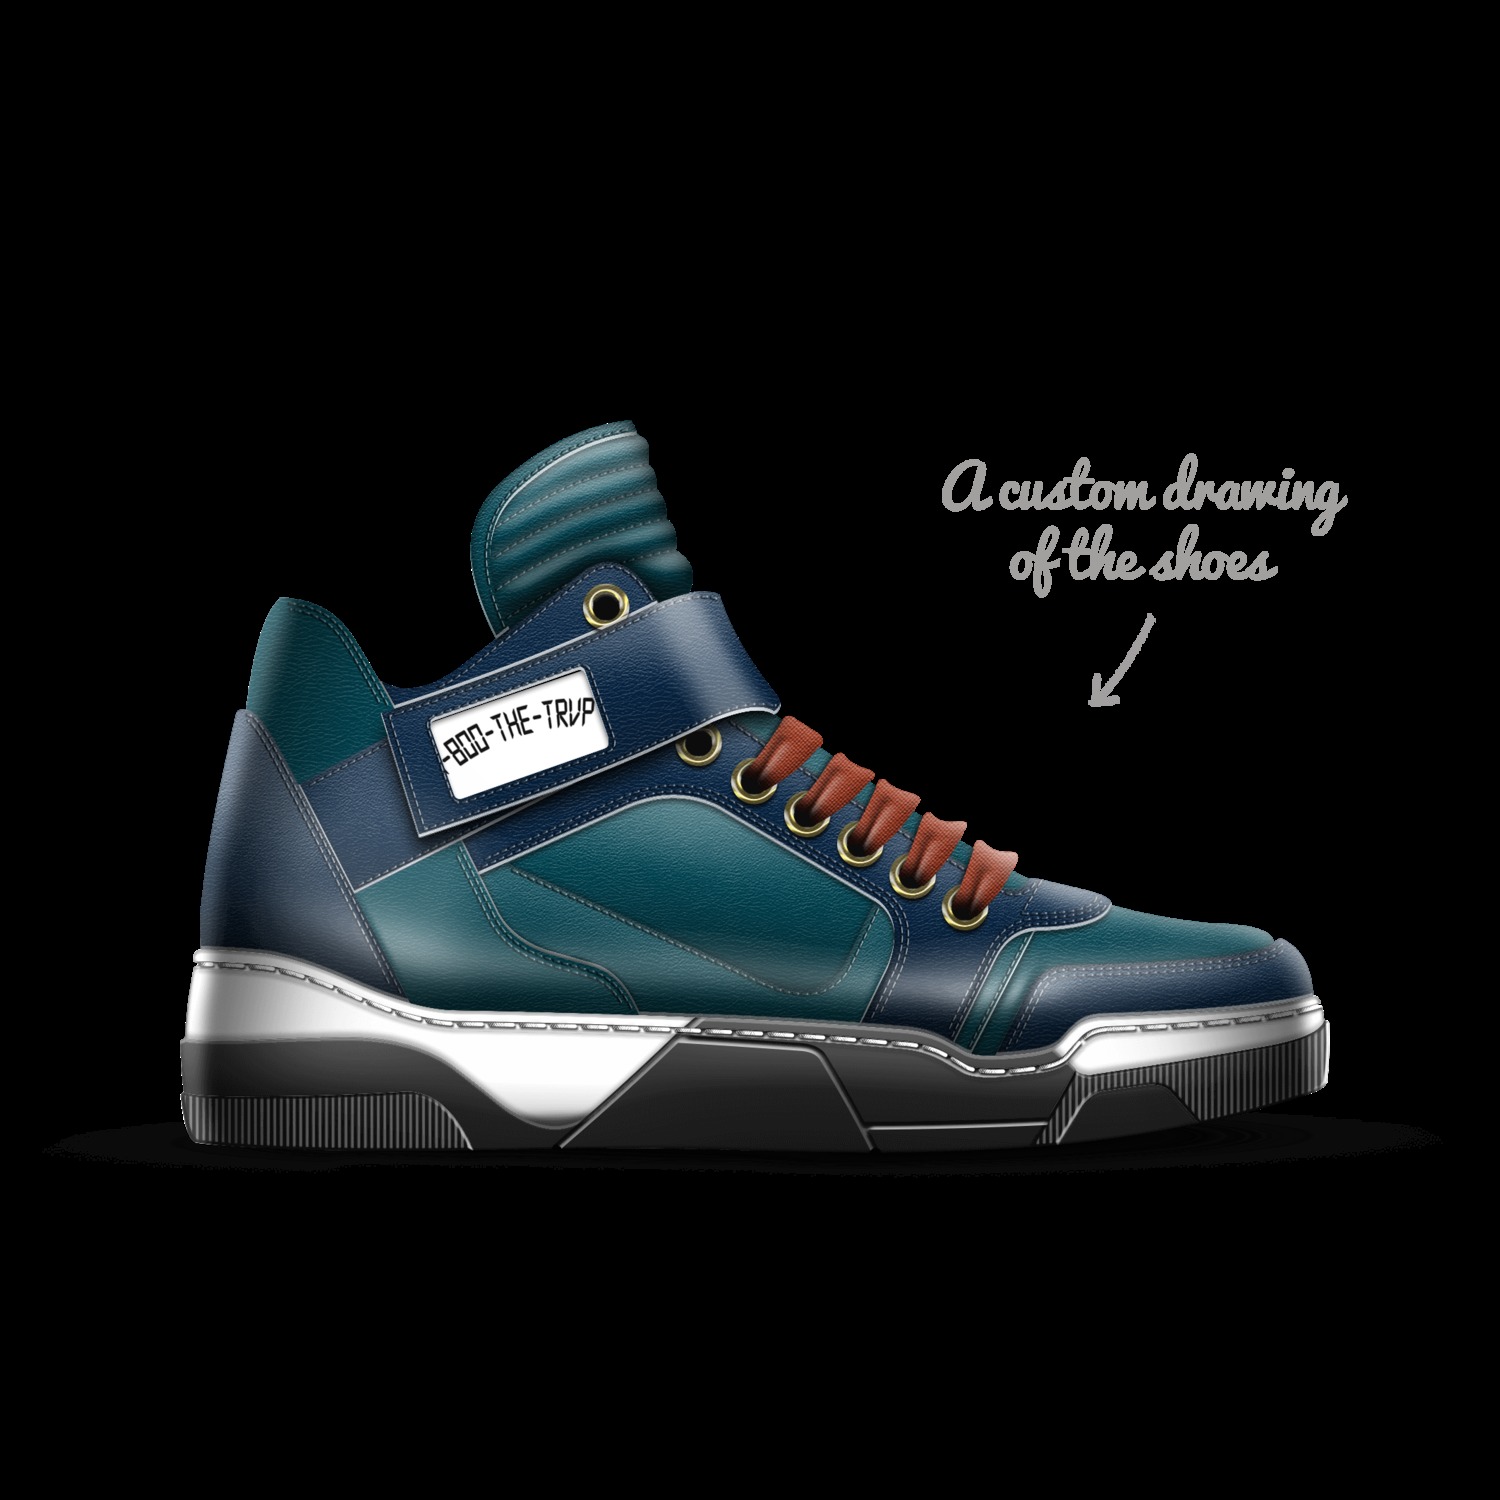 A Custom Shoe concept by Santos Guerrero